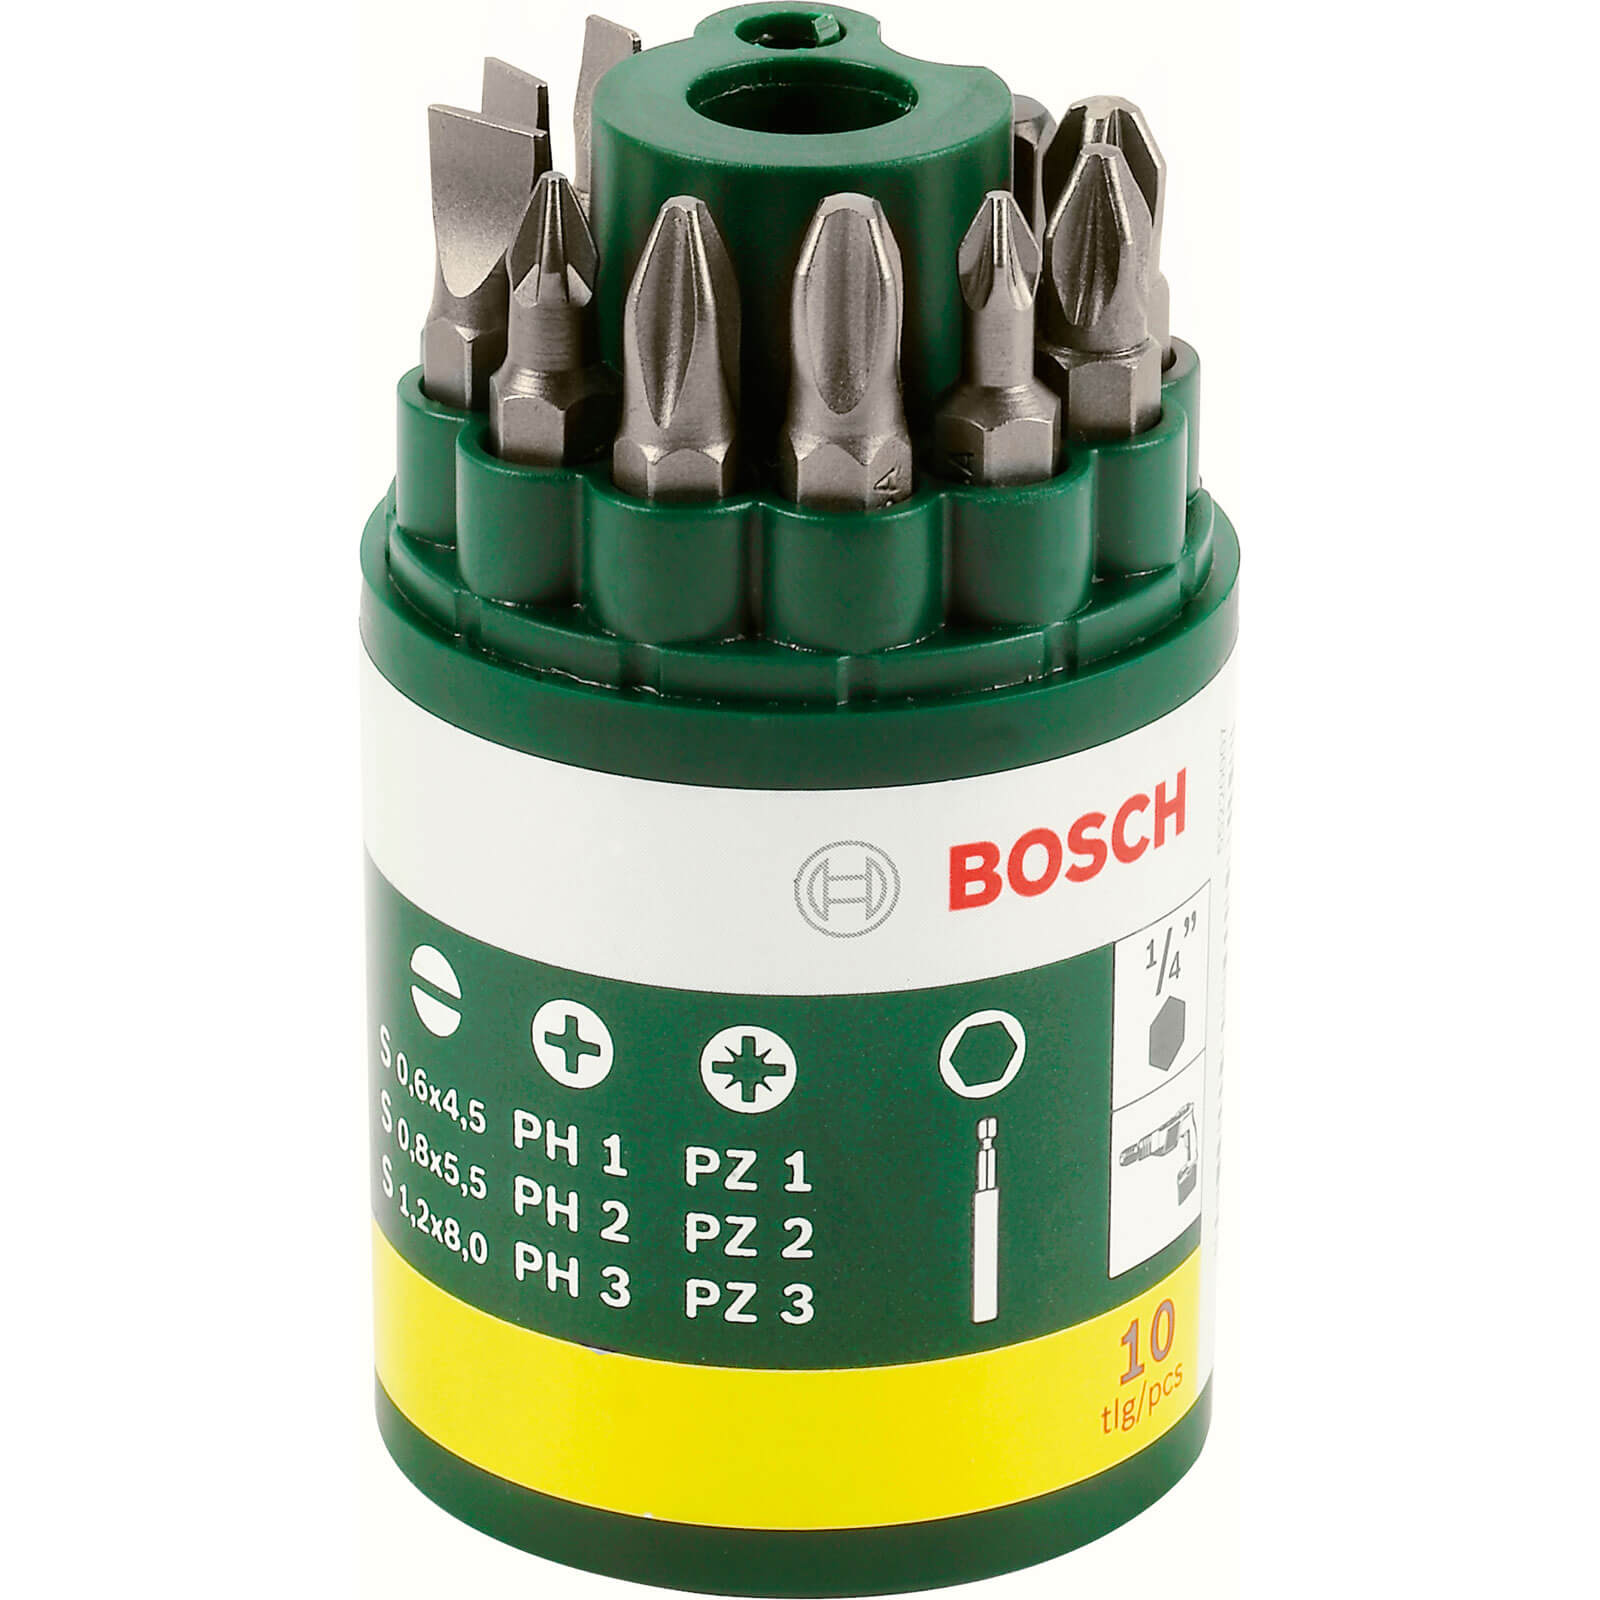 Image of Bosch 10 Piece Screwdriver Bit Set